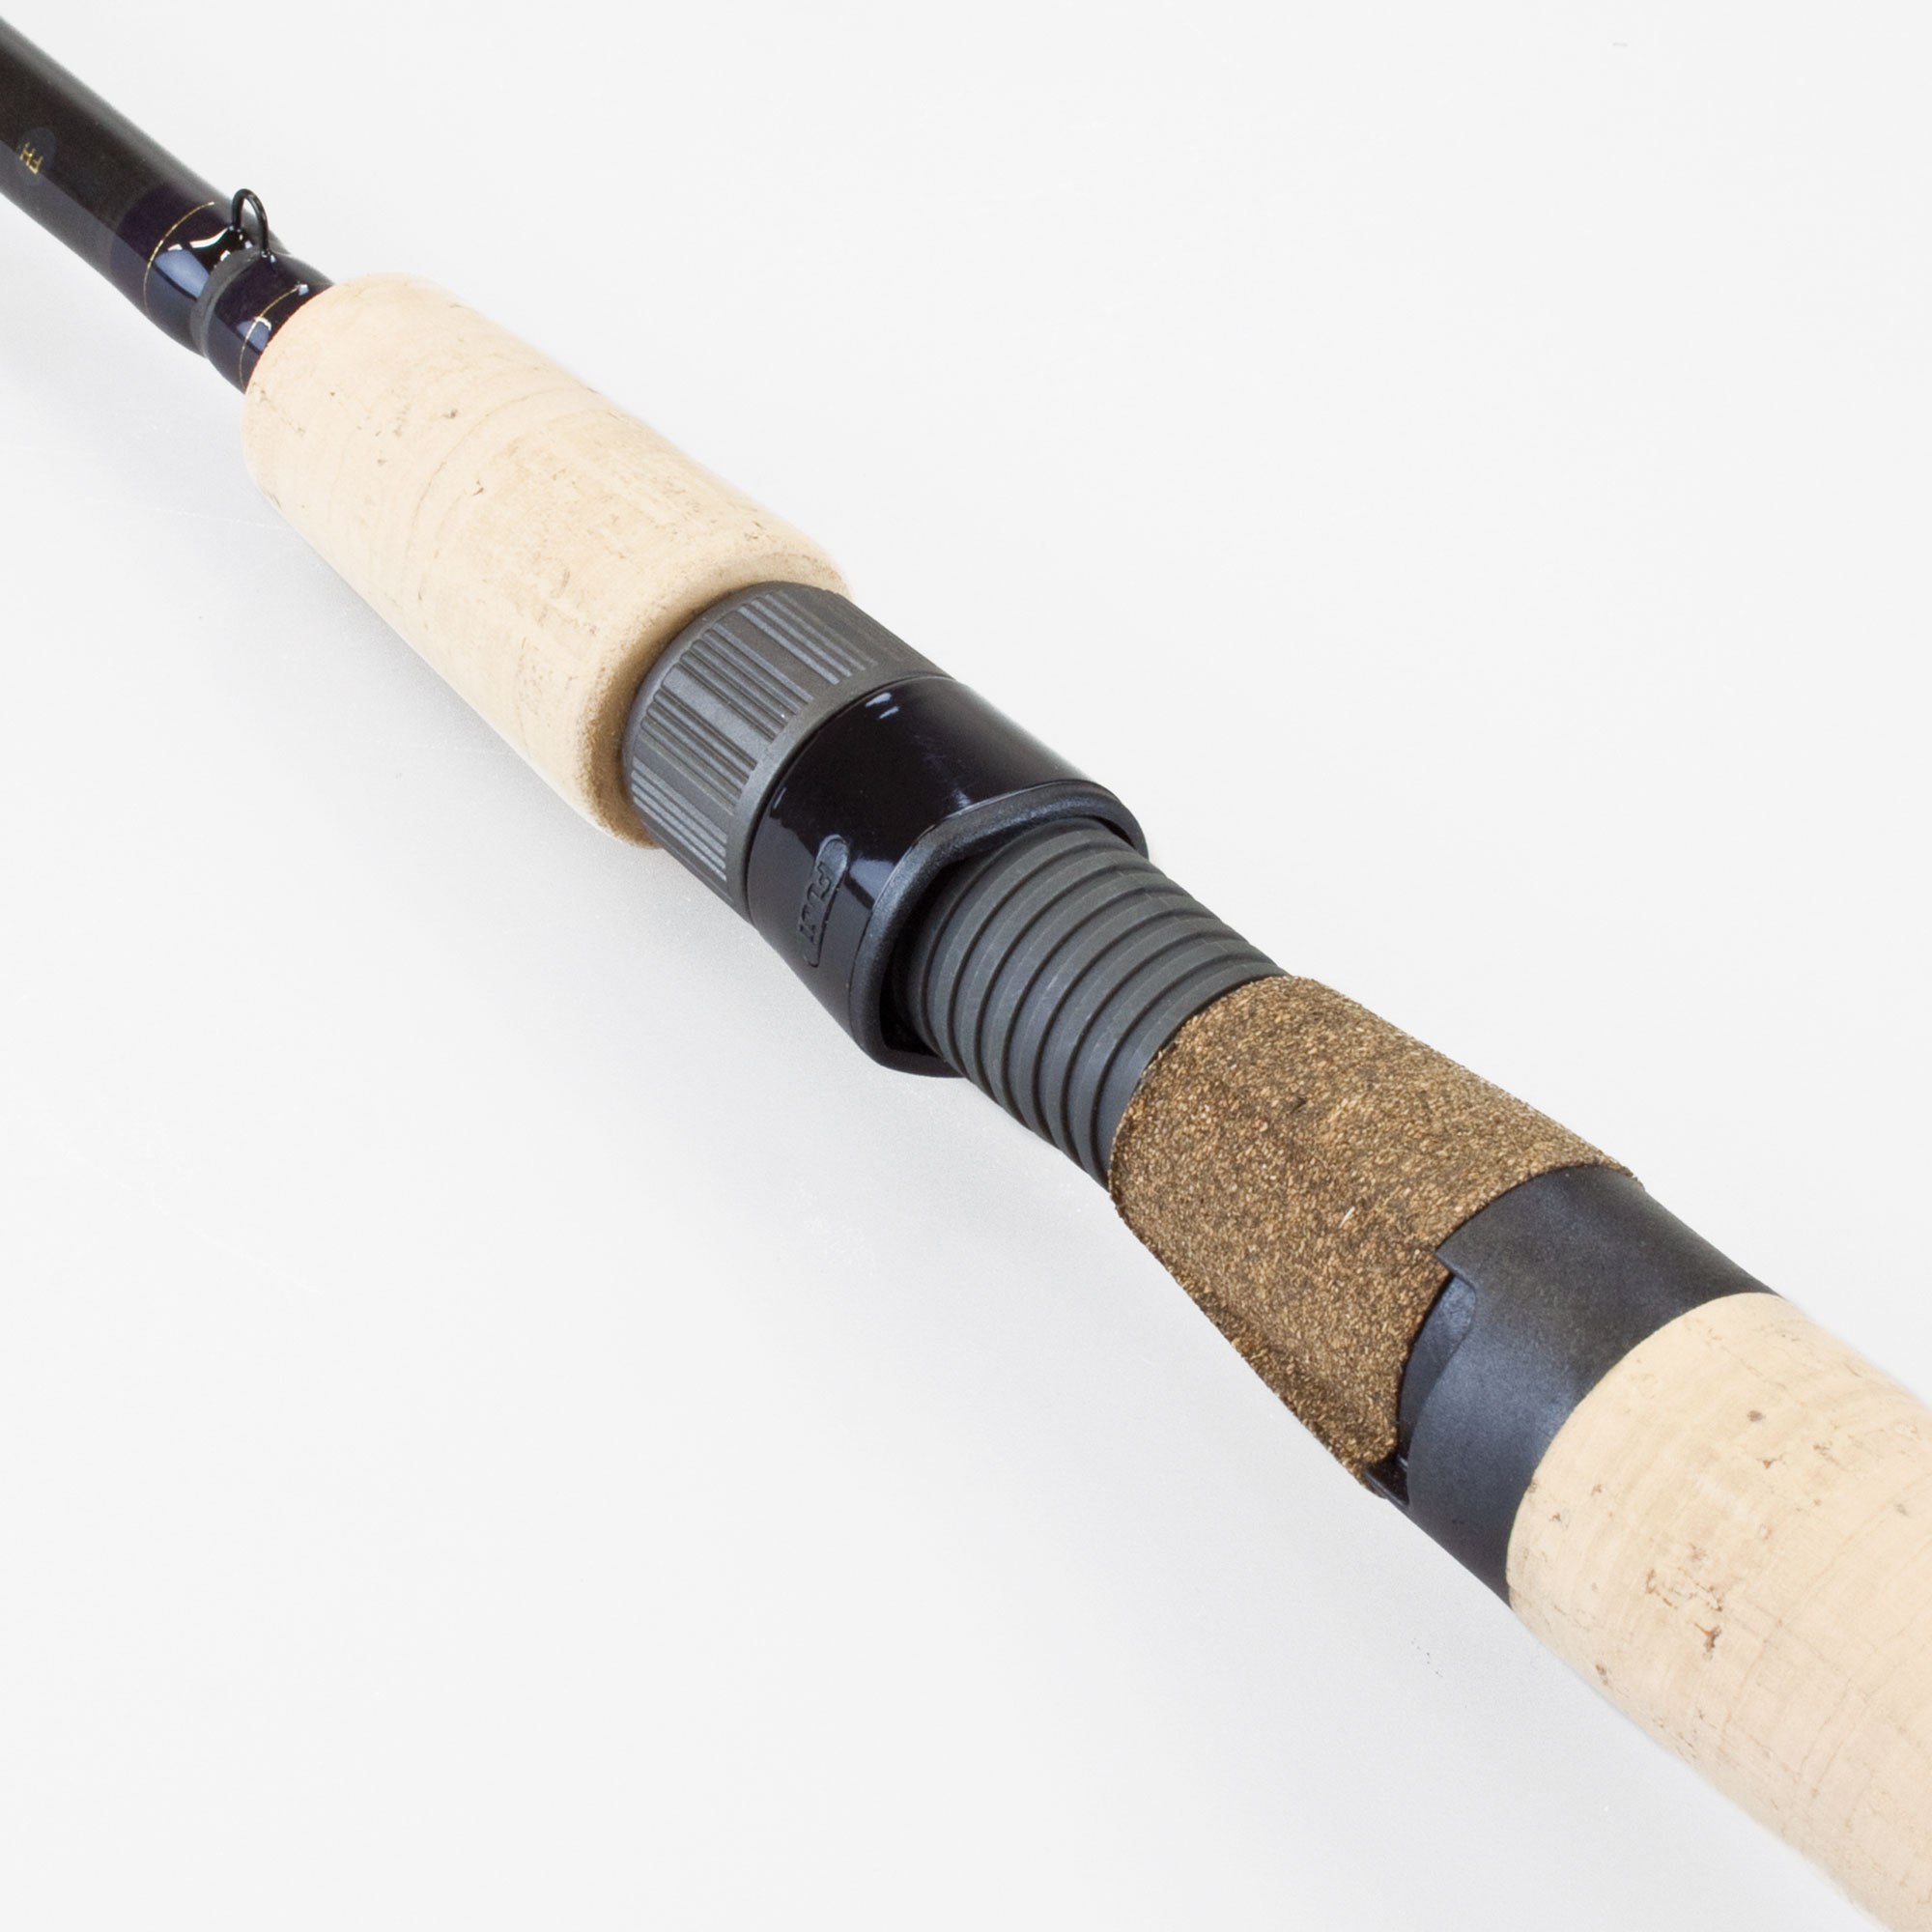 DIY Fishing Rod Building or Repair EVA Handle Grip with Reel Seat